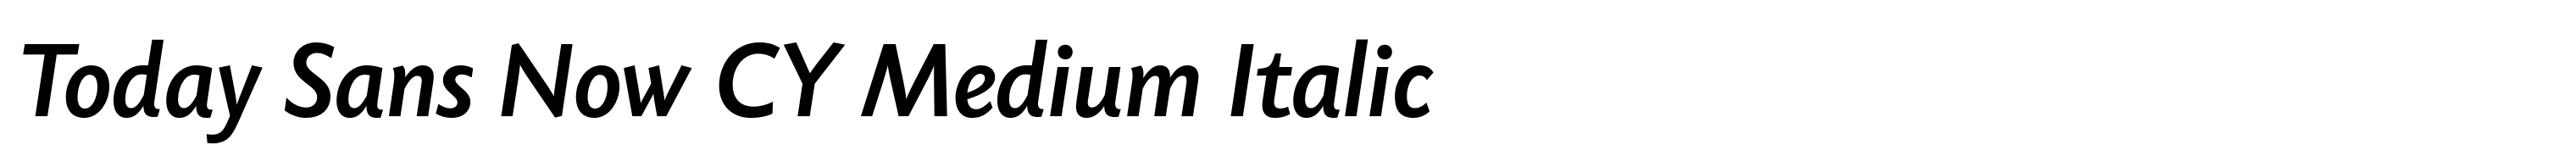 Today Sans Now CY Medium Italic